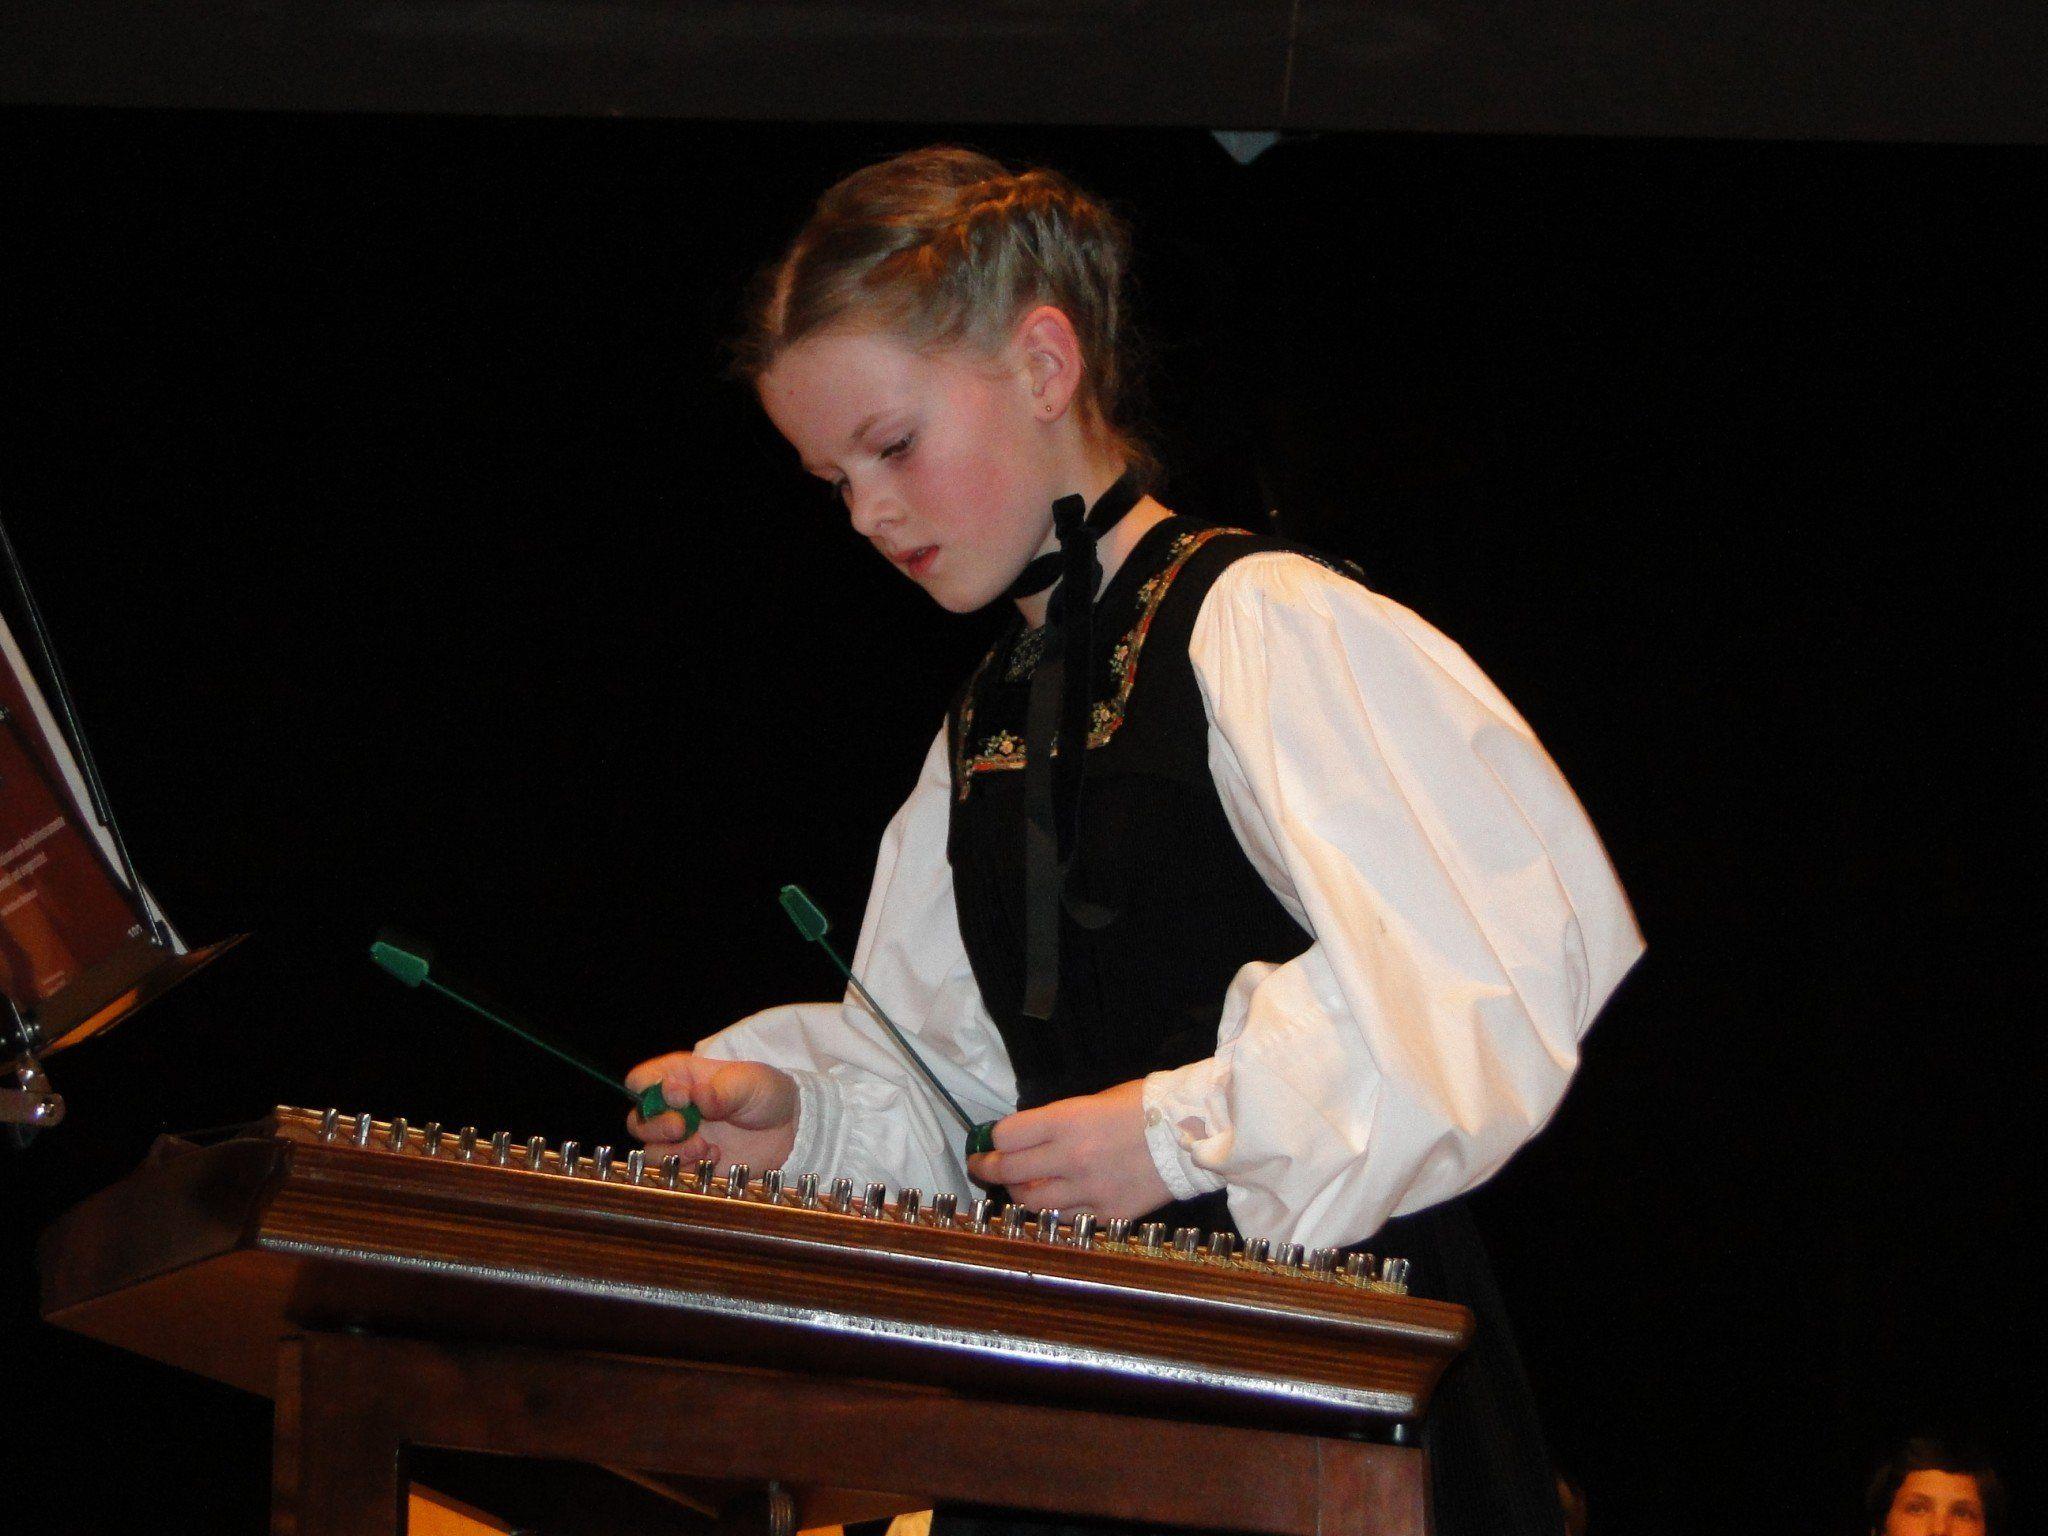 Hingebungsvoll musizierten SchülerInnen des Musikschule Bregenzerwald